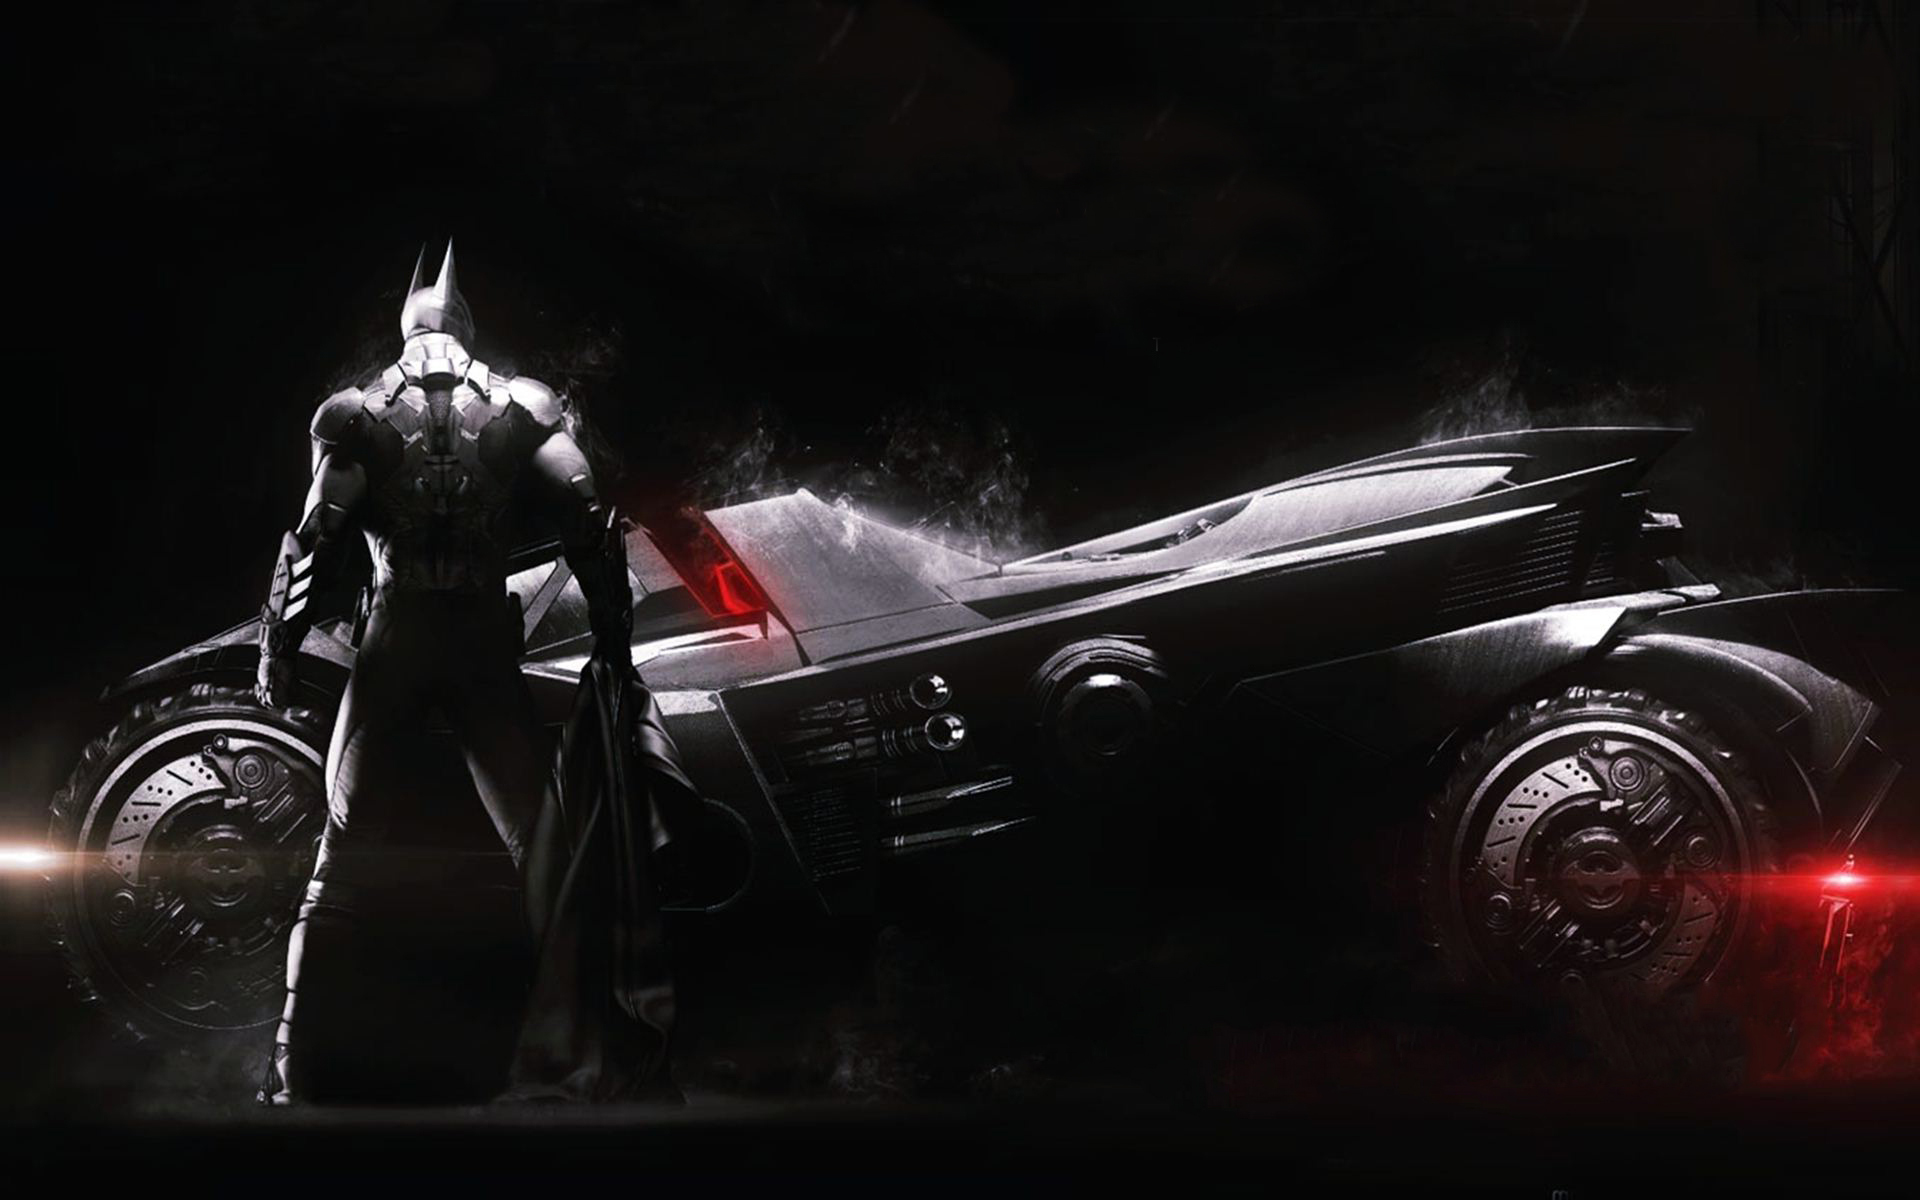 free download arkham knight batmobile